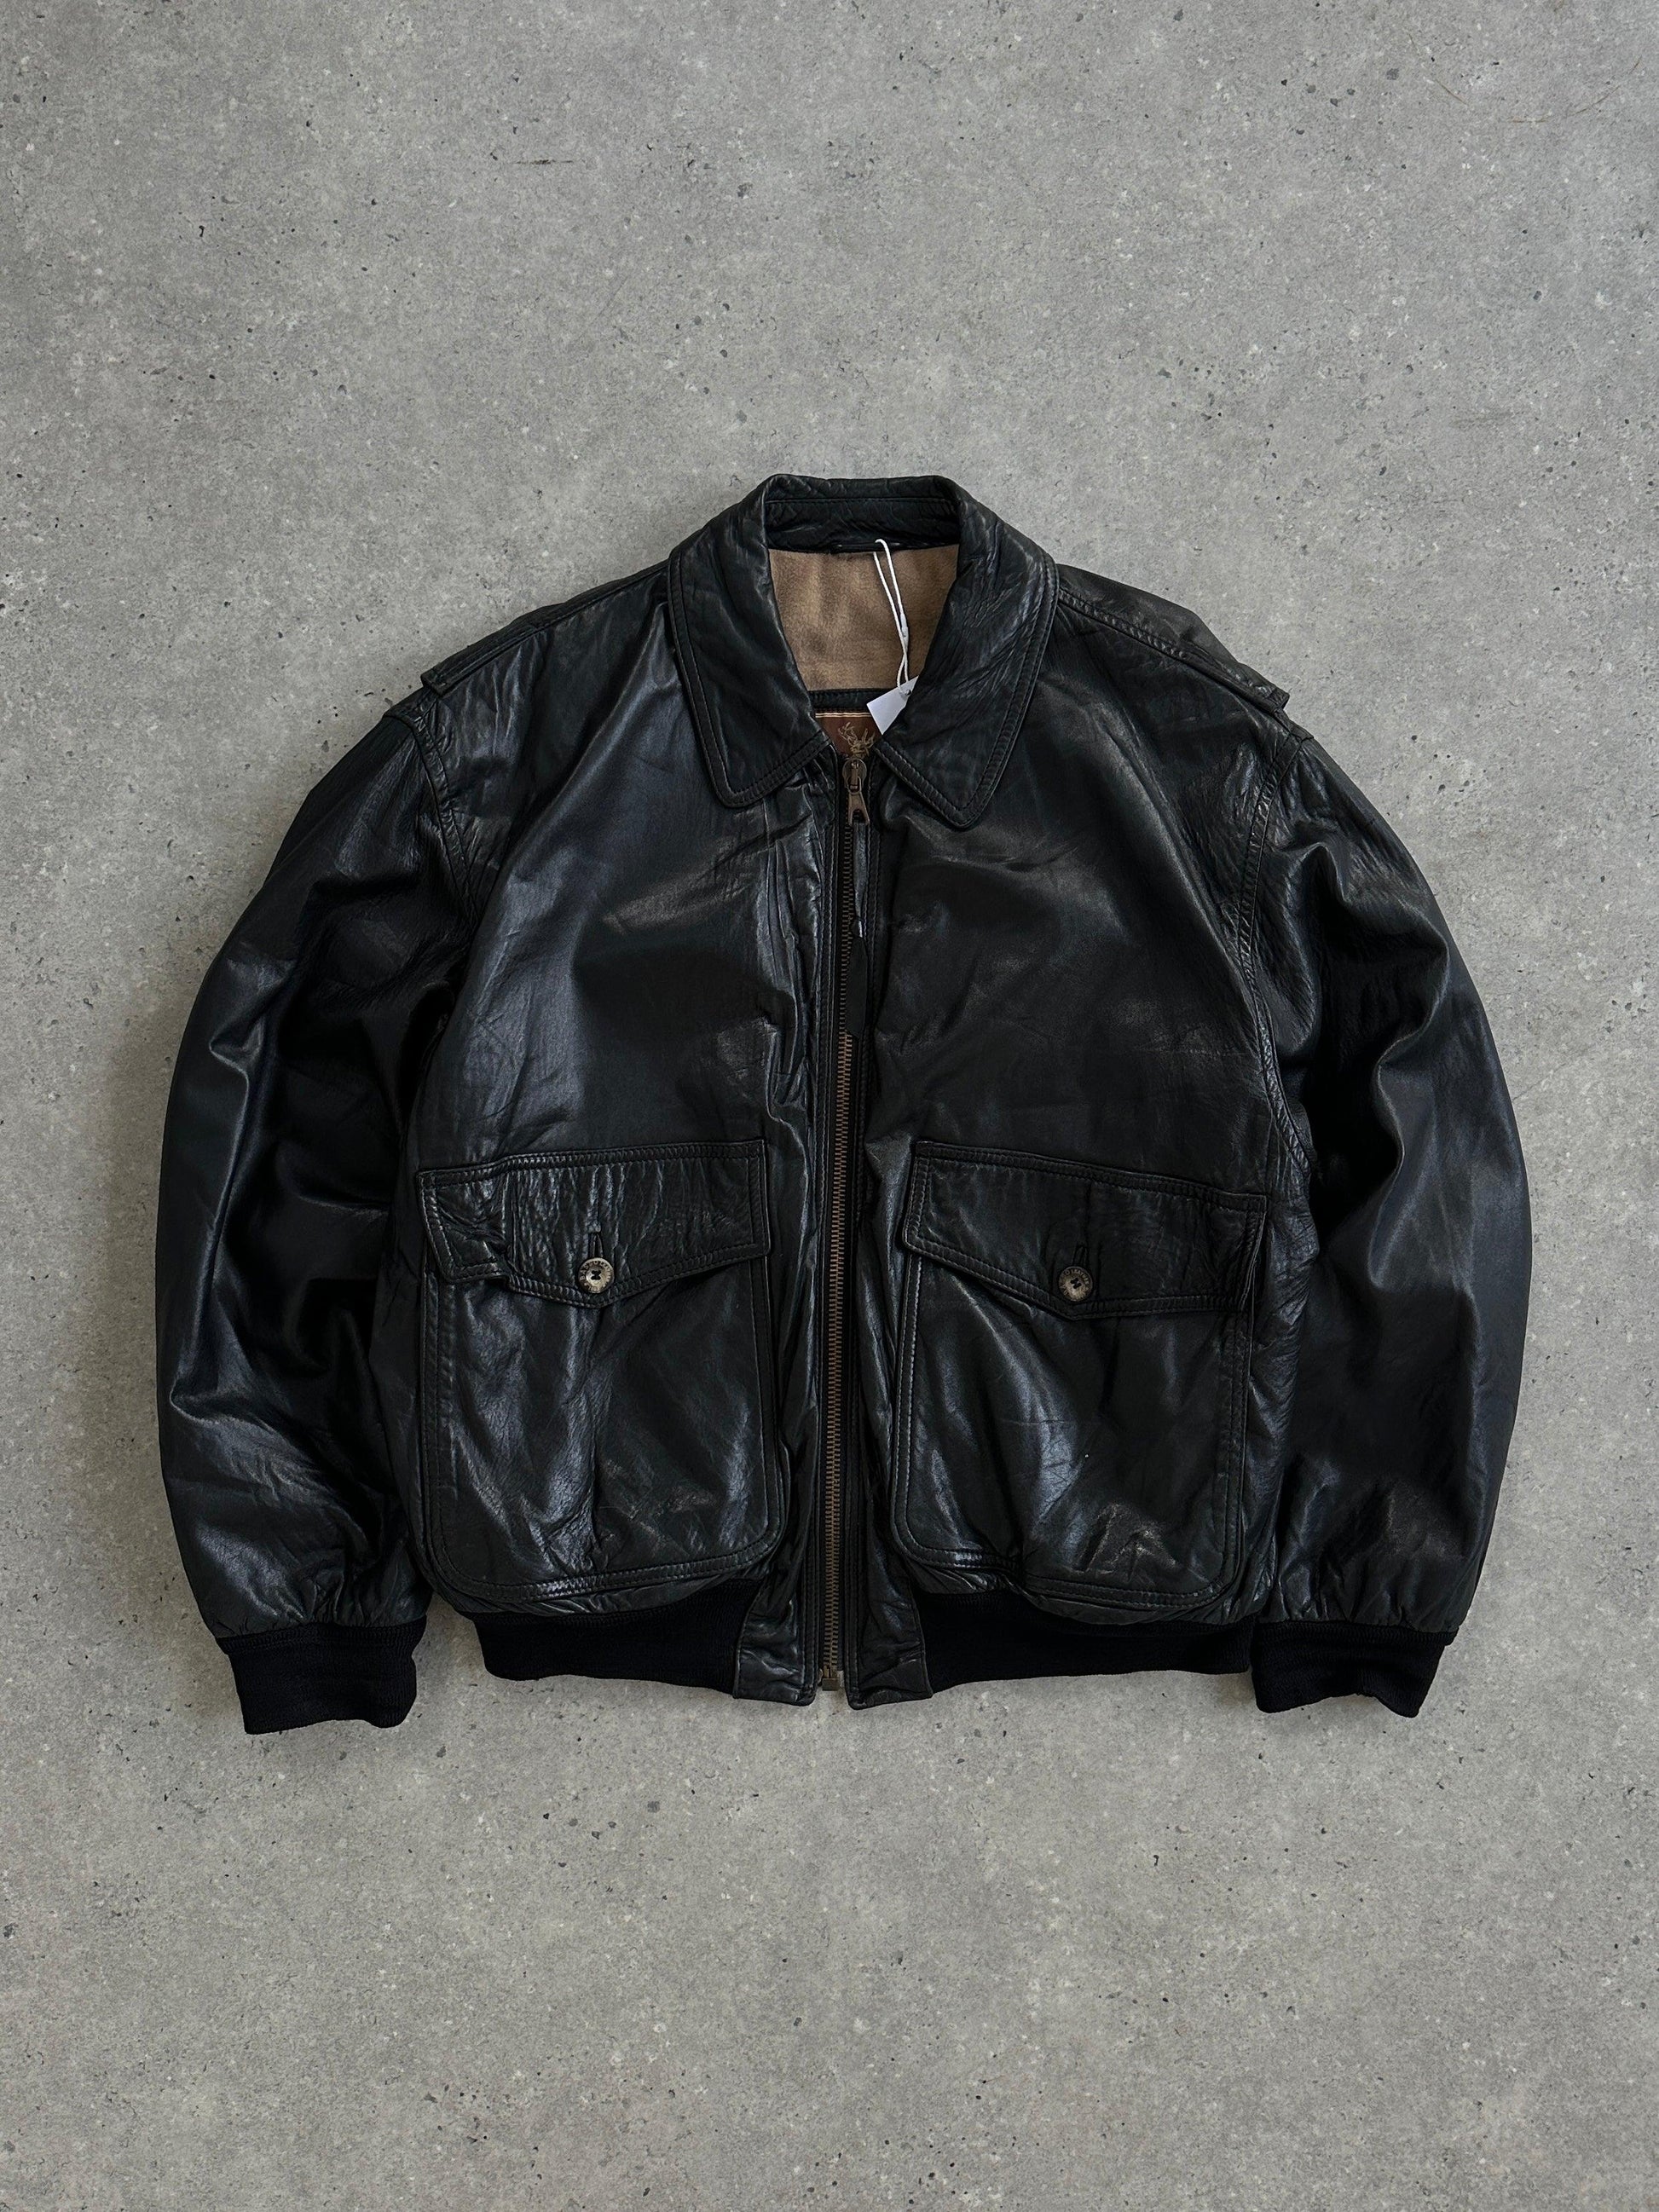 Vintage Leather Bomber Jacket - L - Known Source